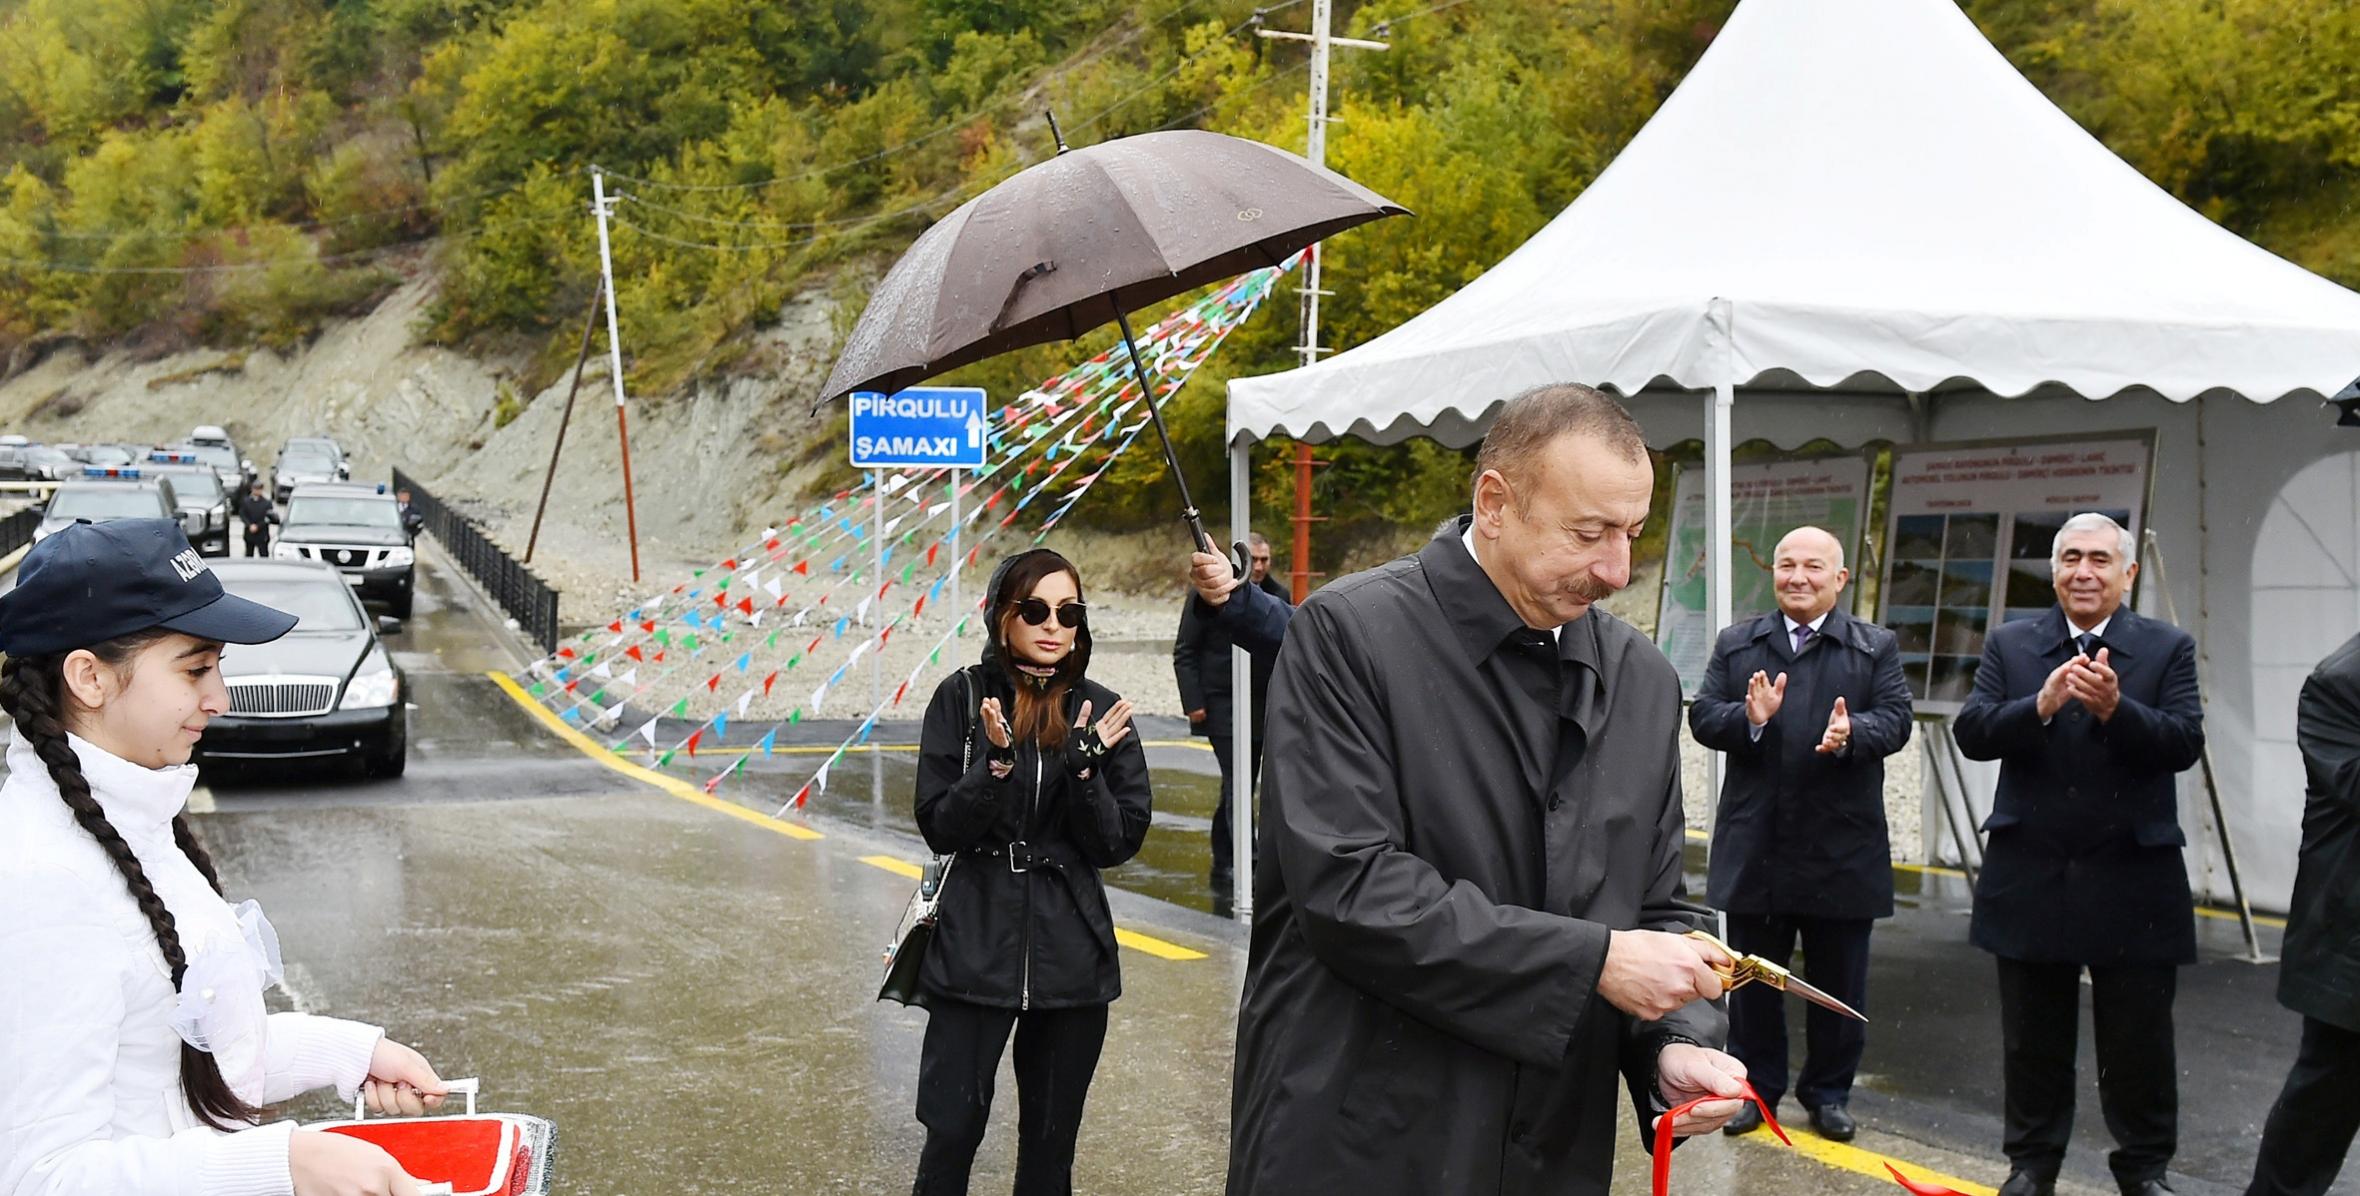 Ilham Aliyev opened Pirgulu-Damirchi highway in Shamakhi